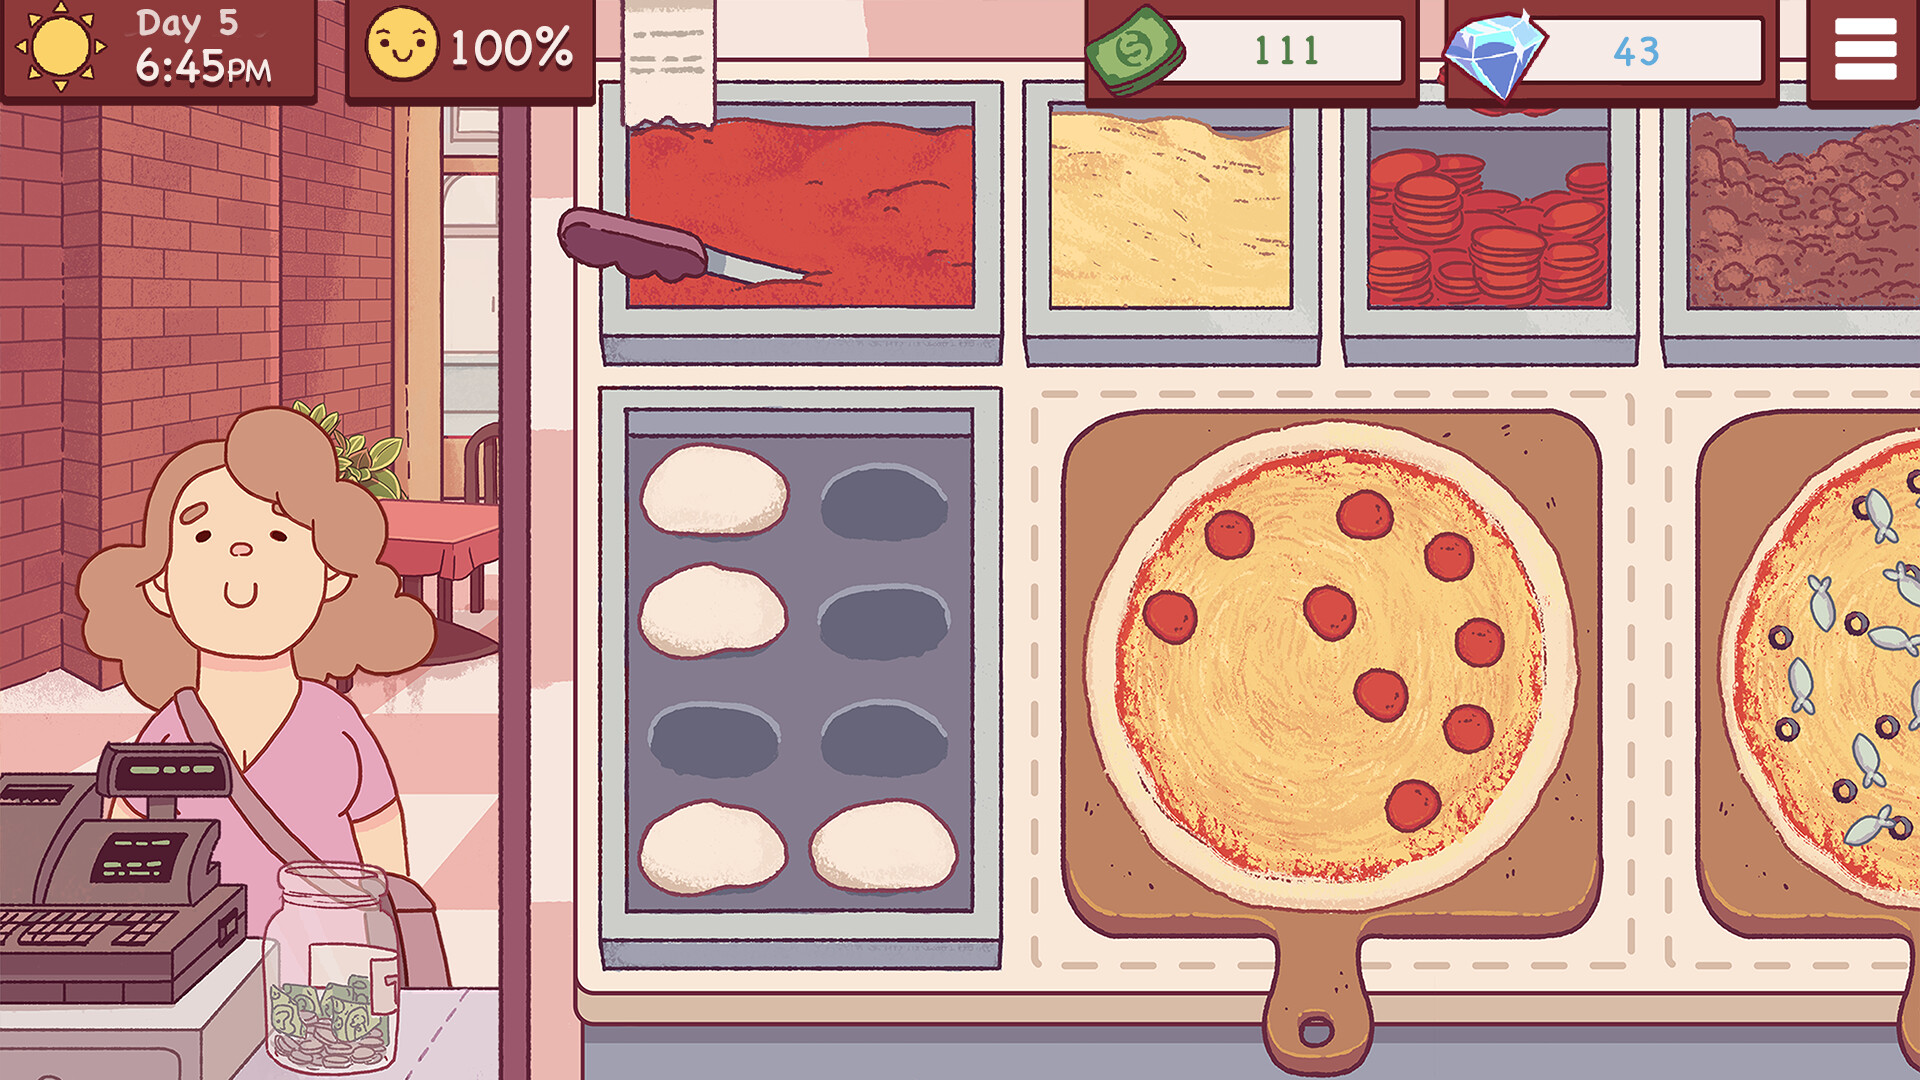 Cooking Simulator - Pizza no Steam